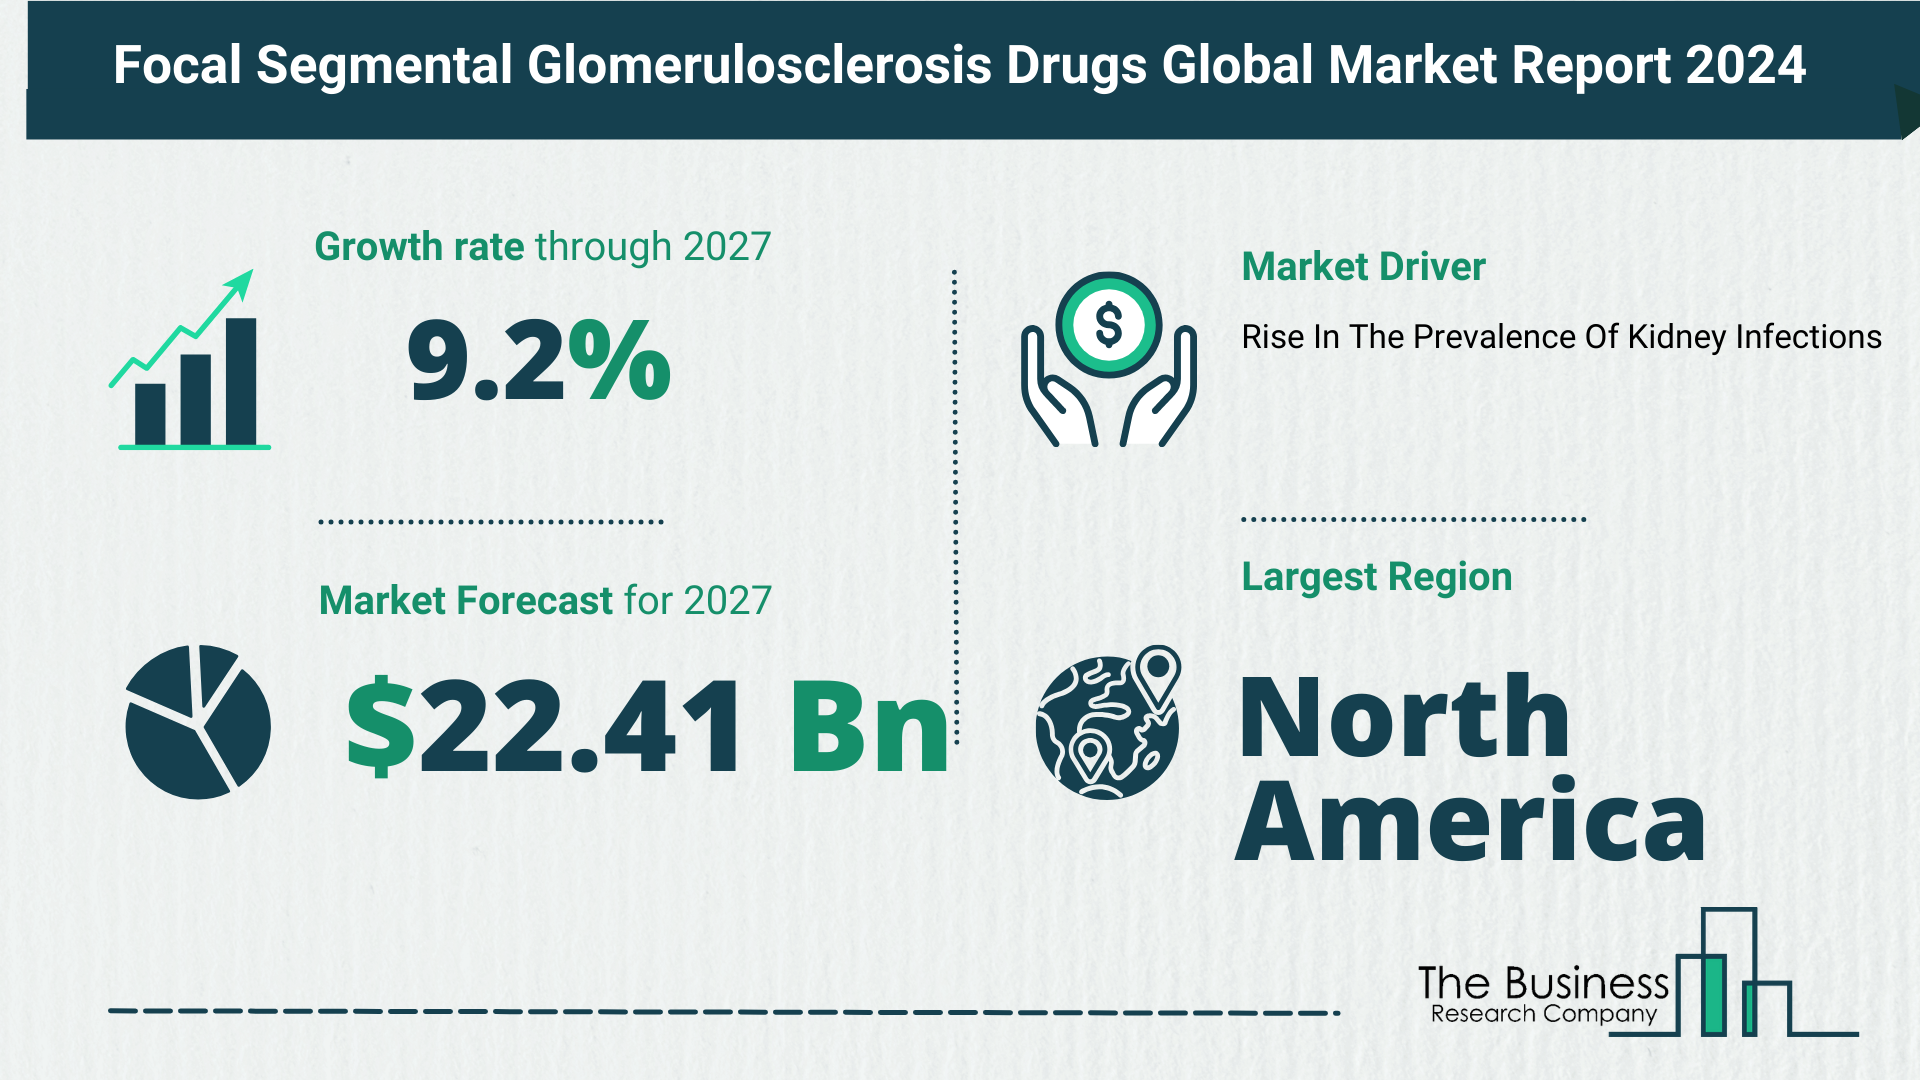 Global Focal Segmental Glomerulosclerosis Drugs Market